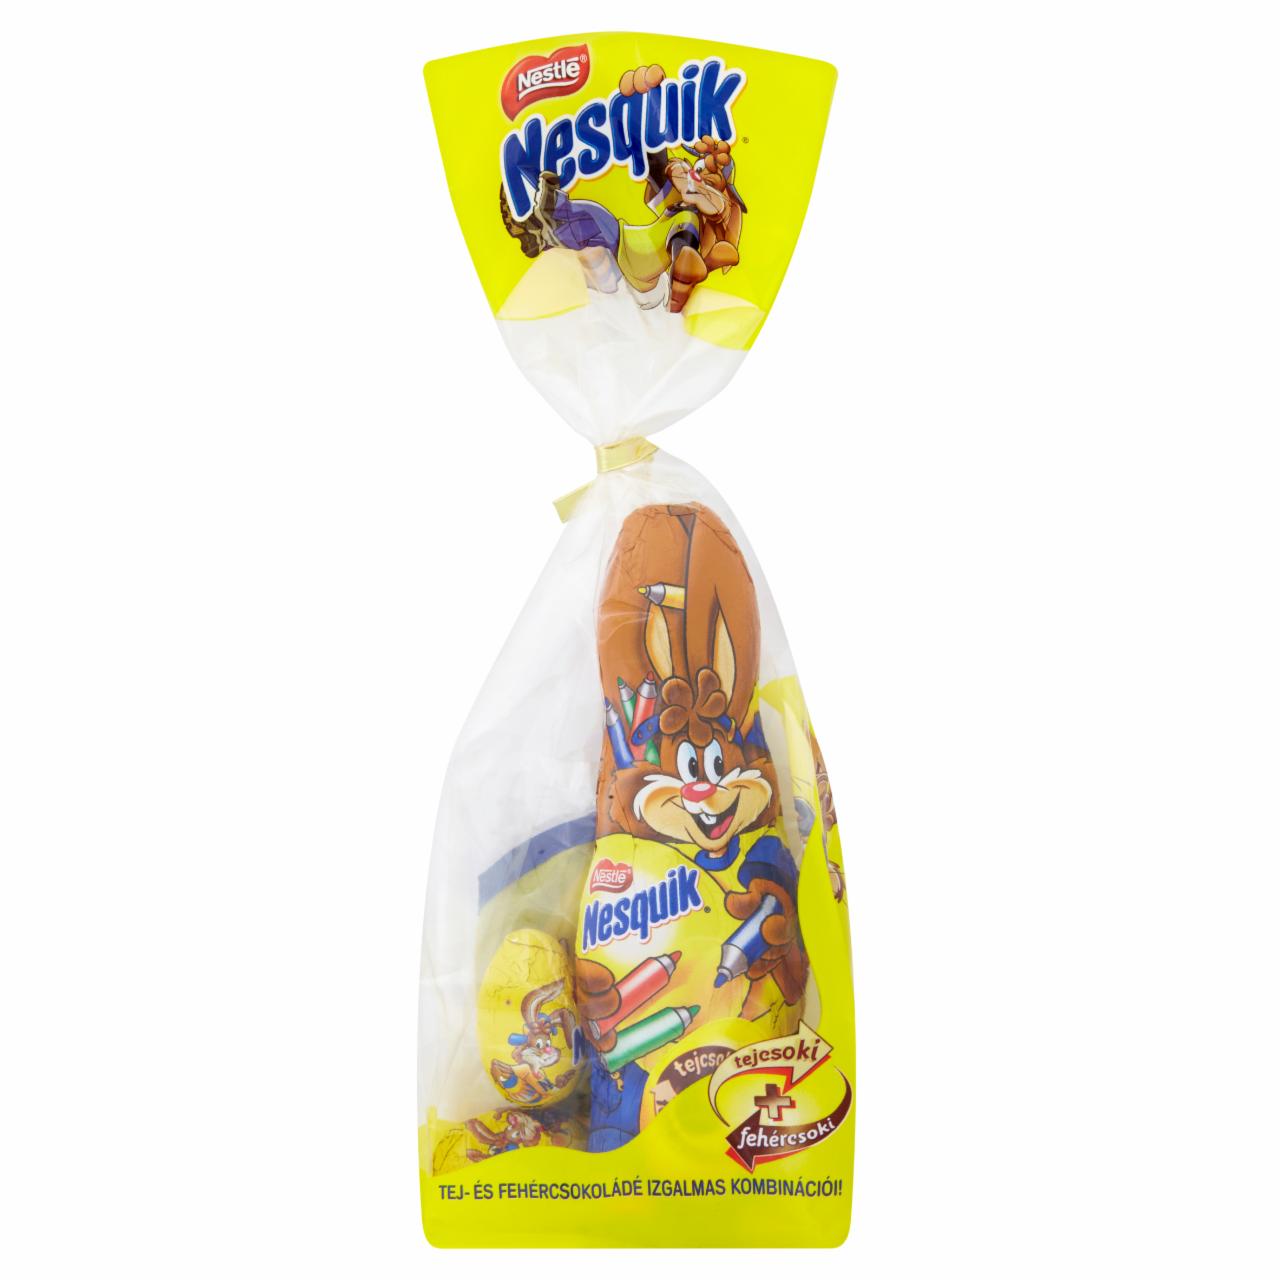 Képek - Nestlé Nesquik húsvéti ajándék zsák frizbivel 120 g